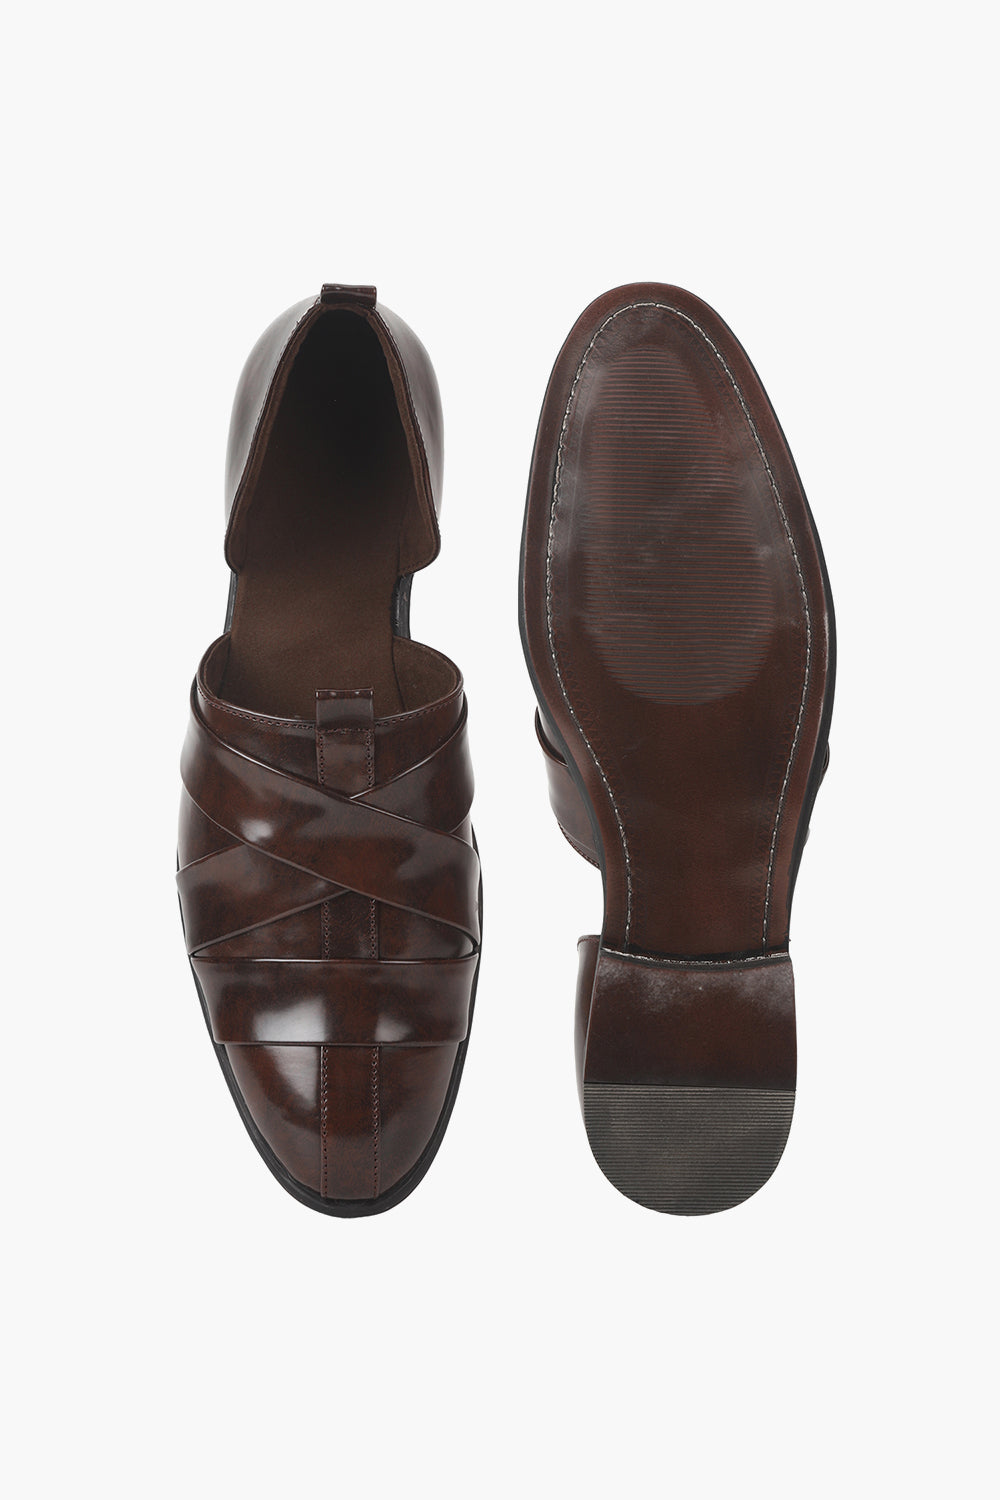 Kolhapuri chappal men|kolapuri chapal men|kolhapuri chappal for men stylish|sherwani  slippers|leather slippers men-6 : Amazon.in: Shoes & Handbags